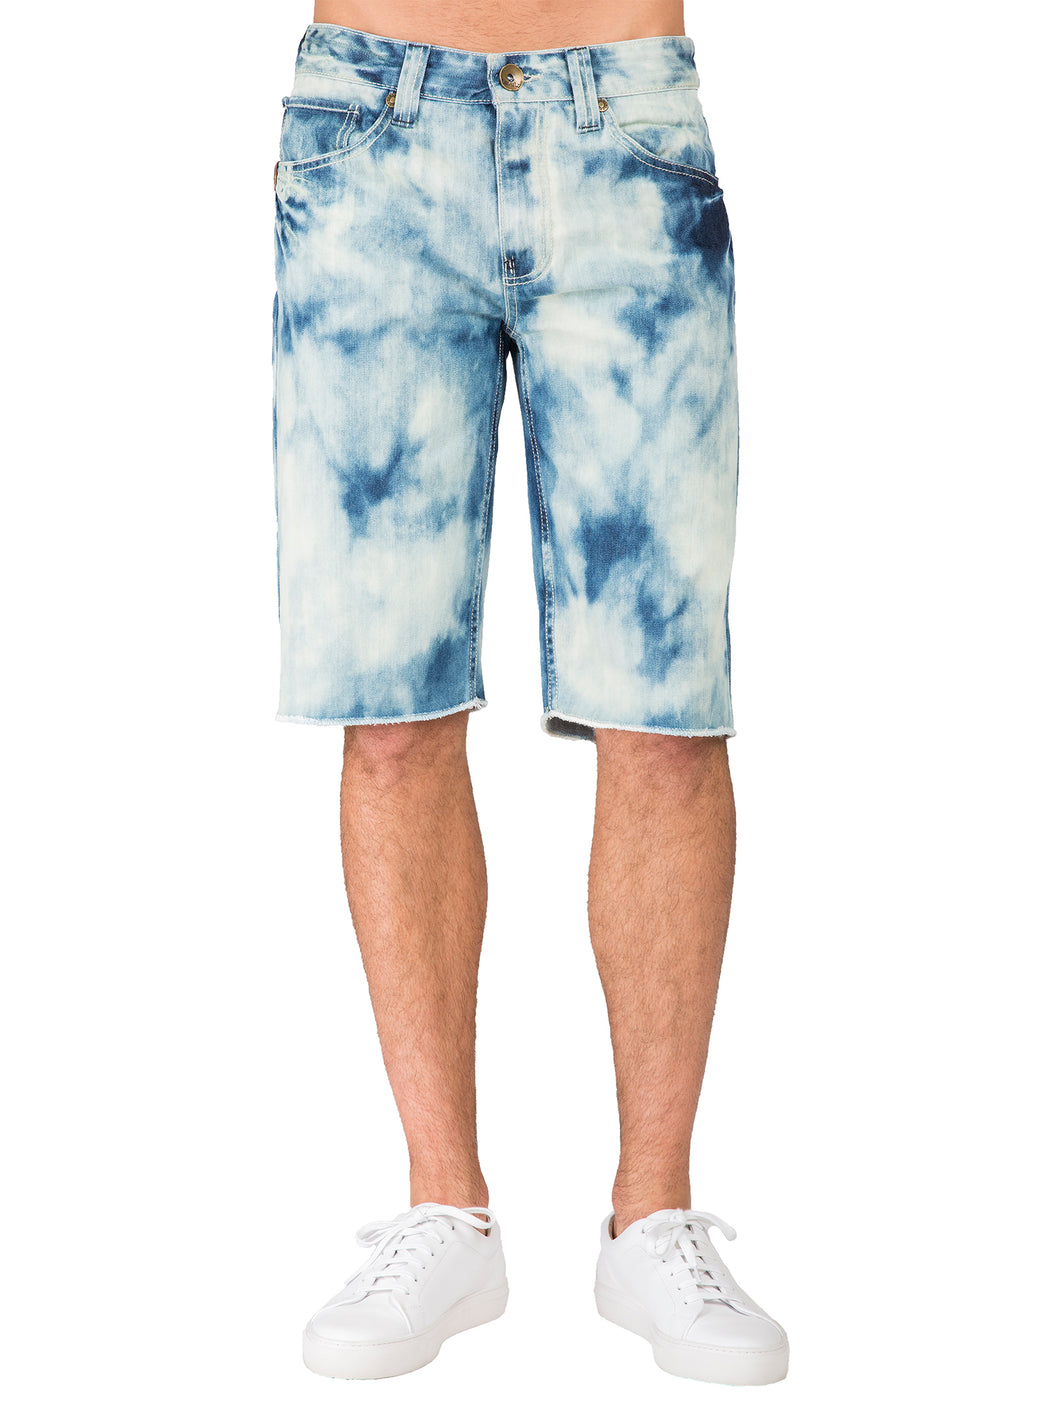 Men's Premium Denim Shorts Midrise Spot Bleached Wash 13